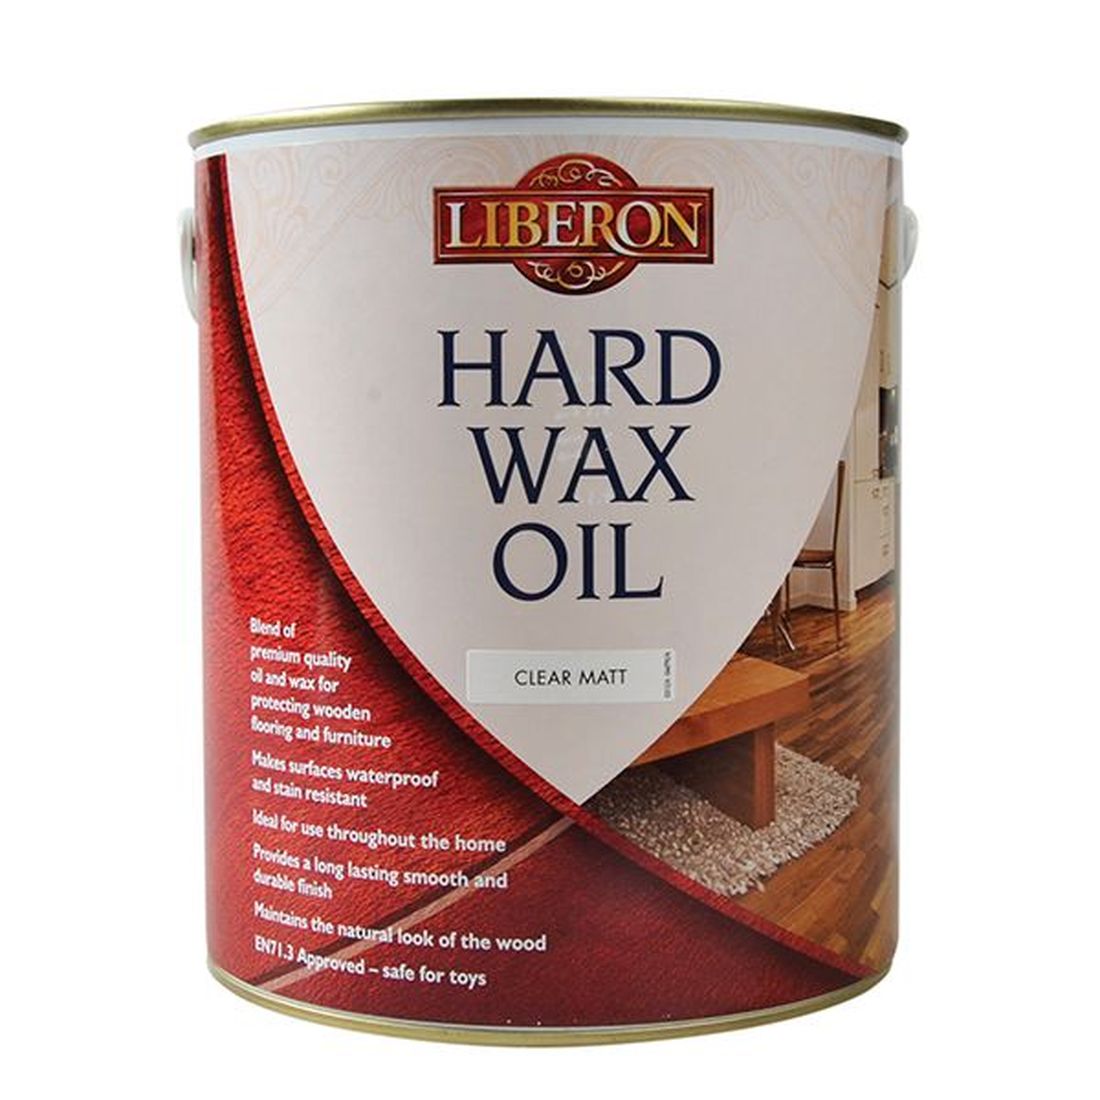 Liberon Hard Wax Oil Clear Matt 2.5 litre 